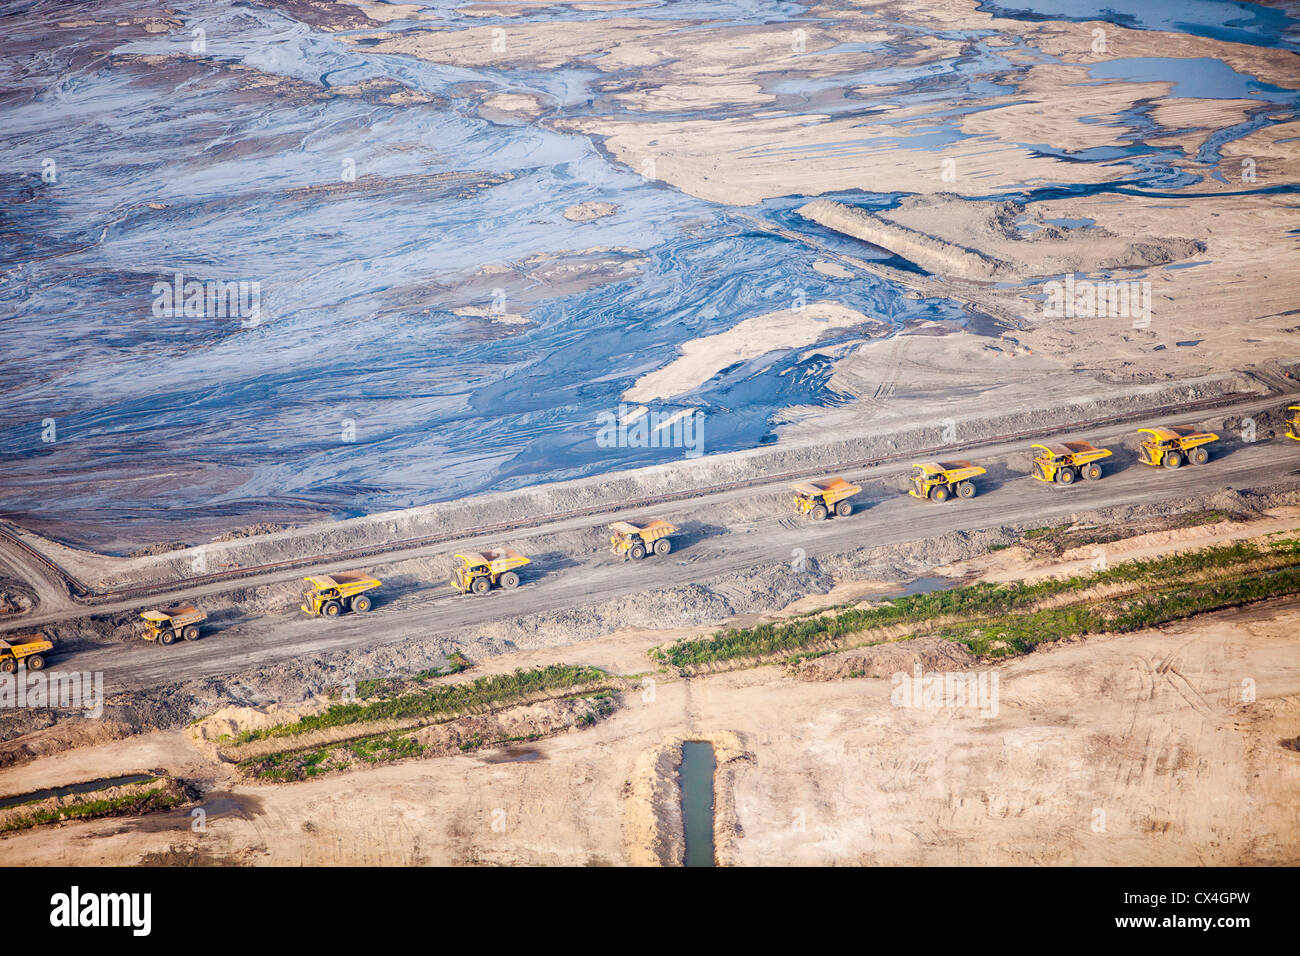 Les dépôts de sables bitumineux exploités au nord de Fort McMurray, Alberta, Canada. Banque D'Images